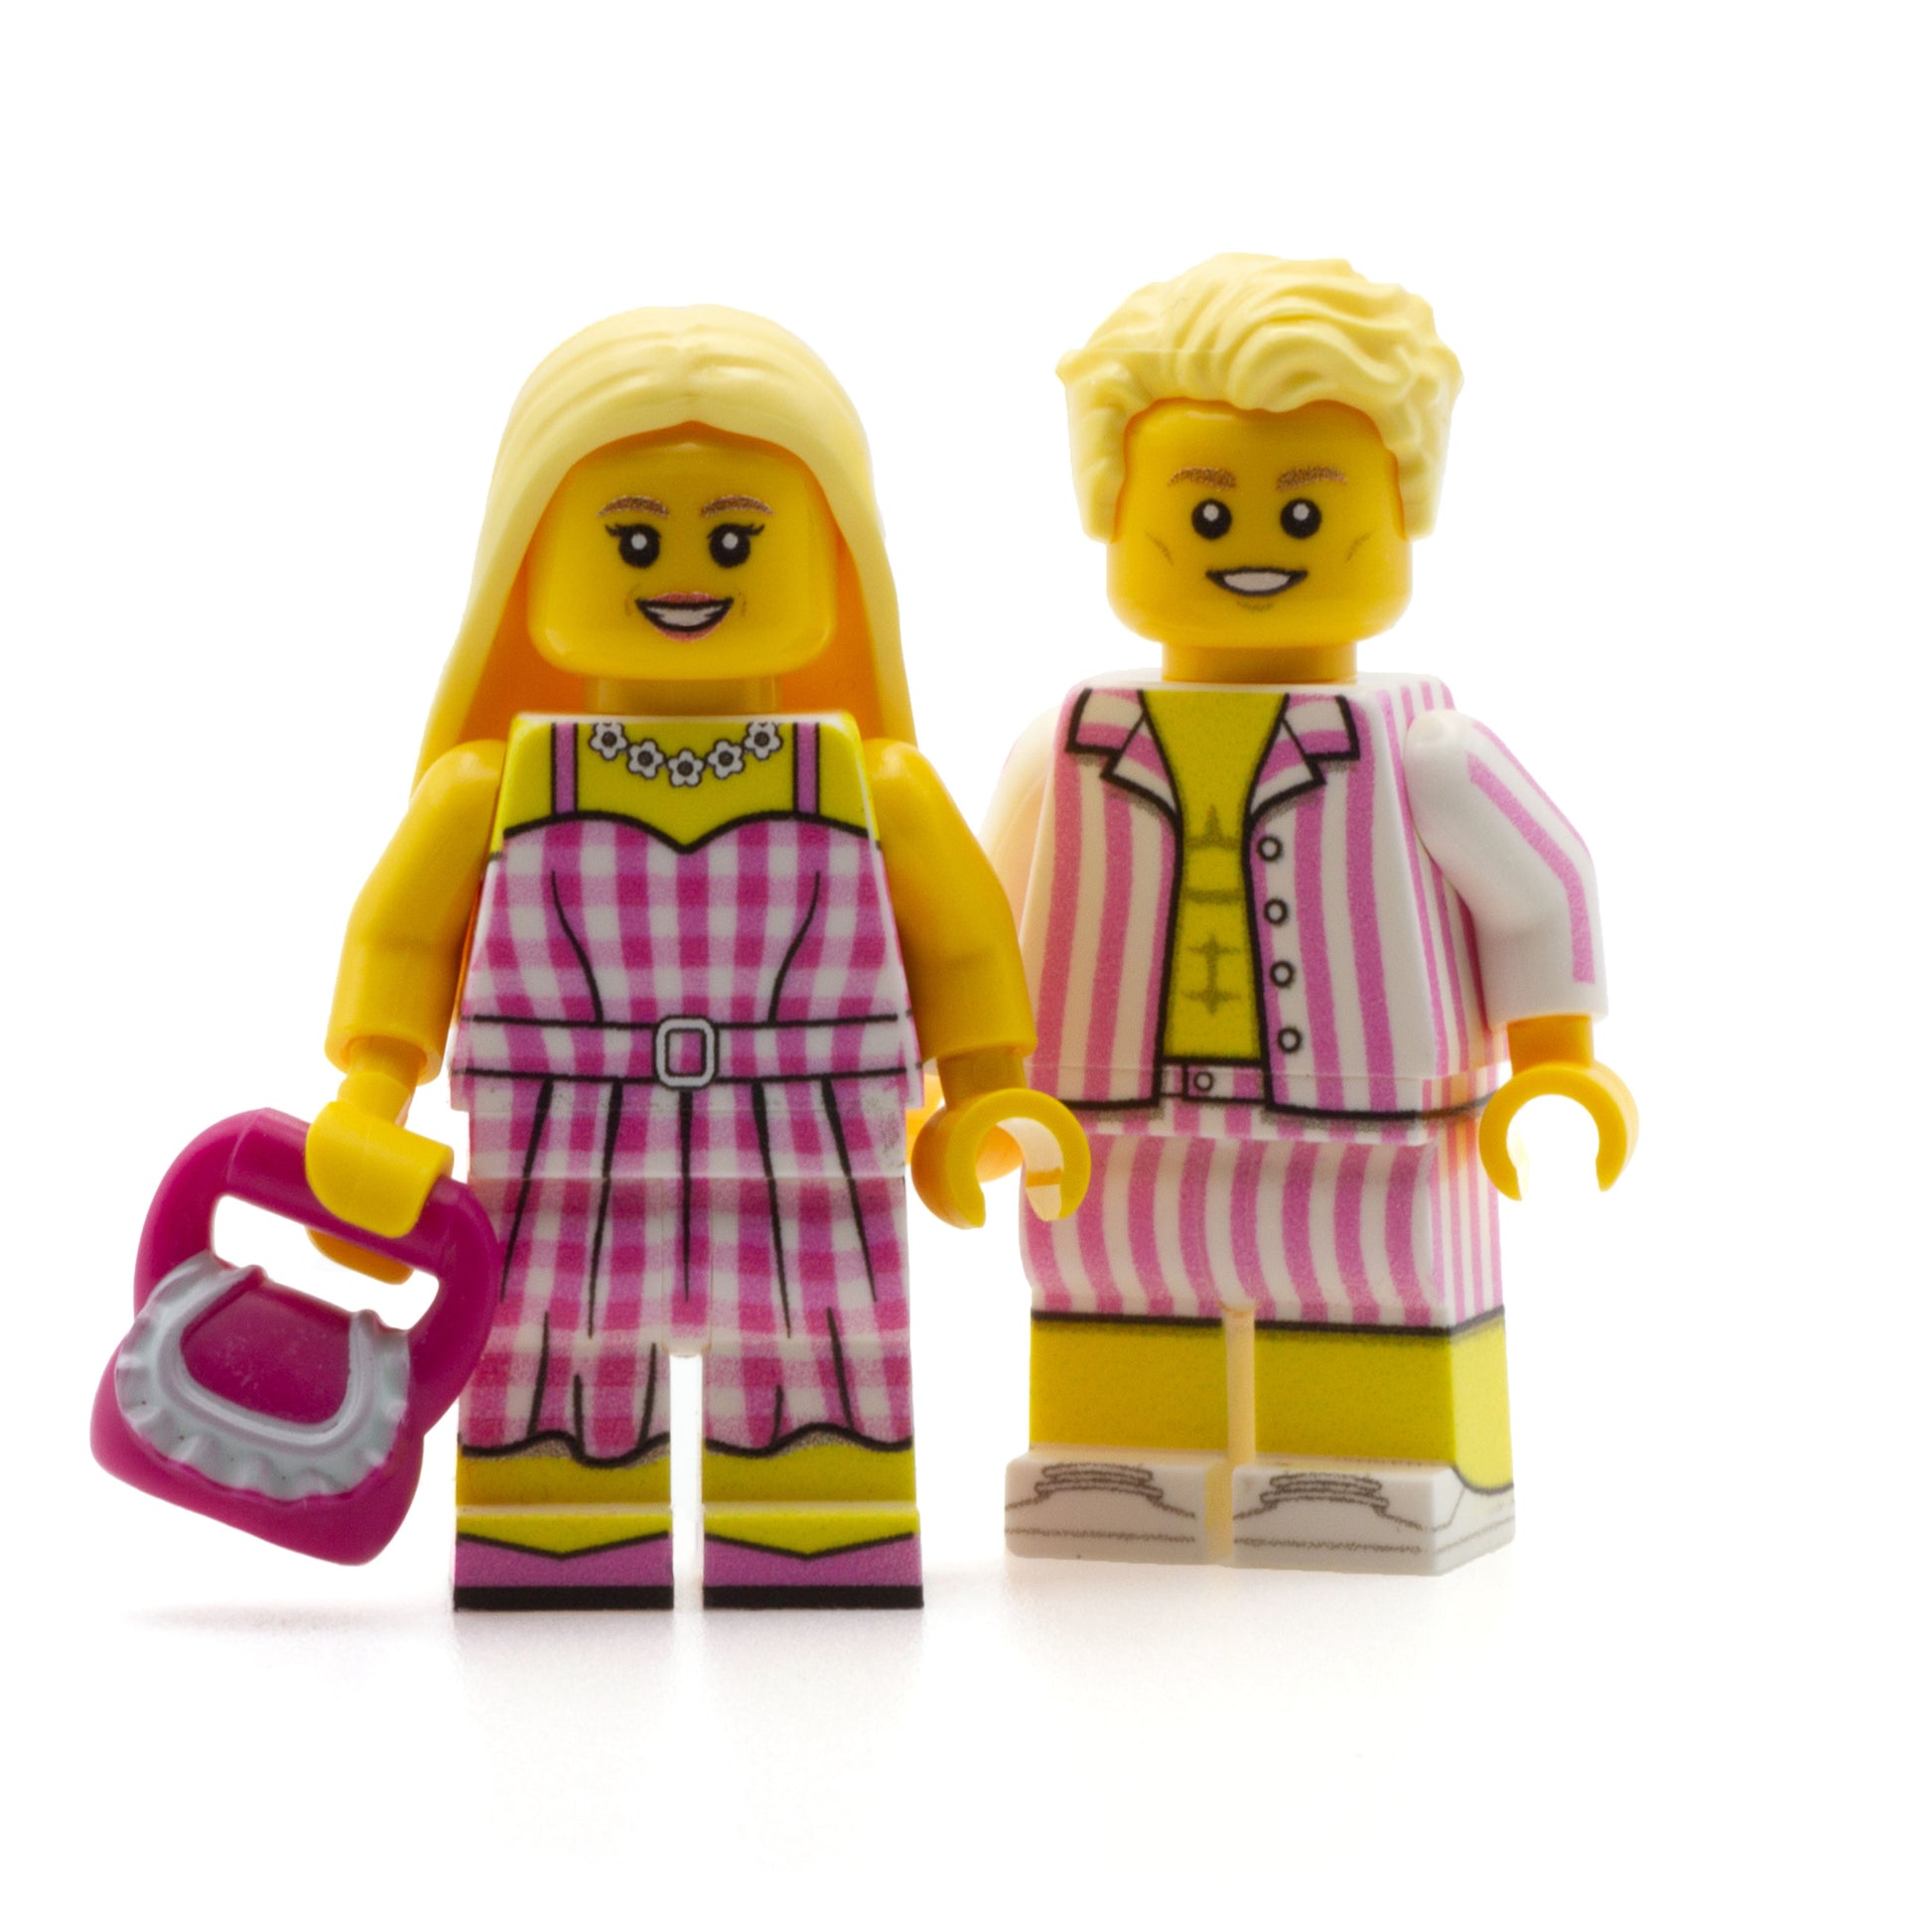 barbie and ken - custom lego minifigures